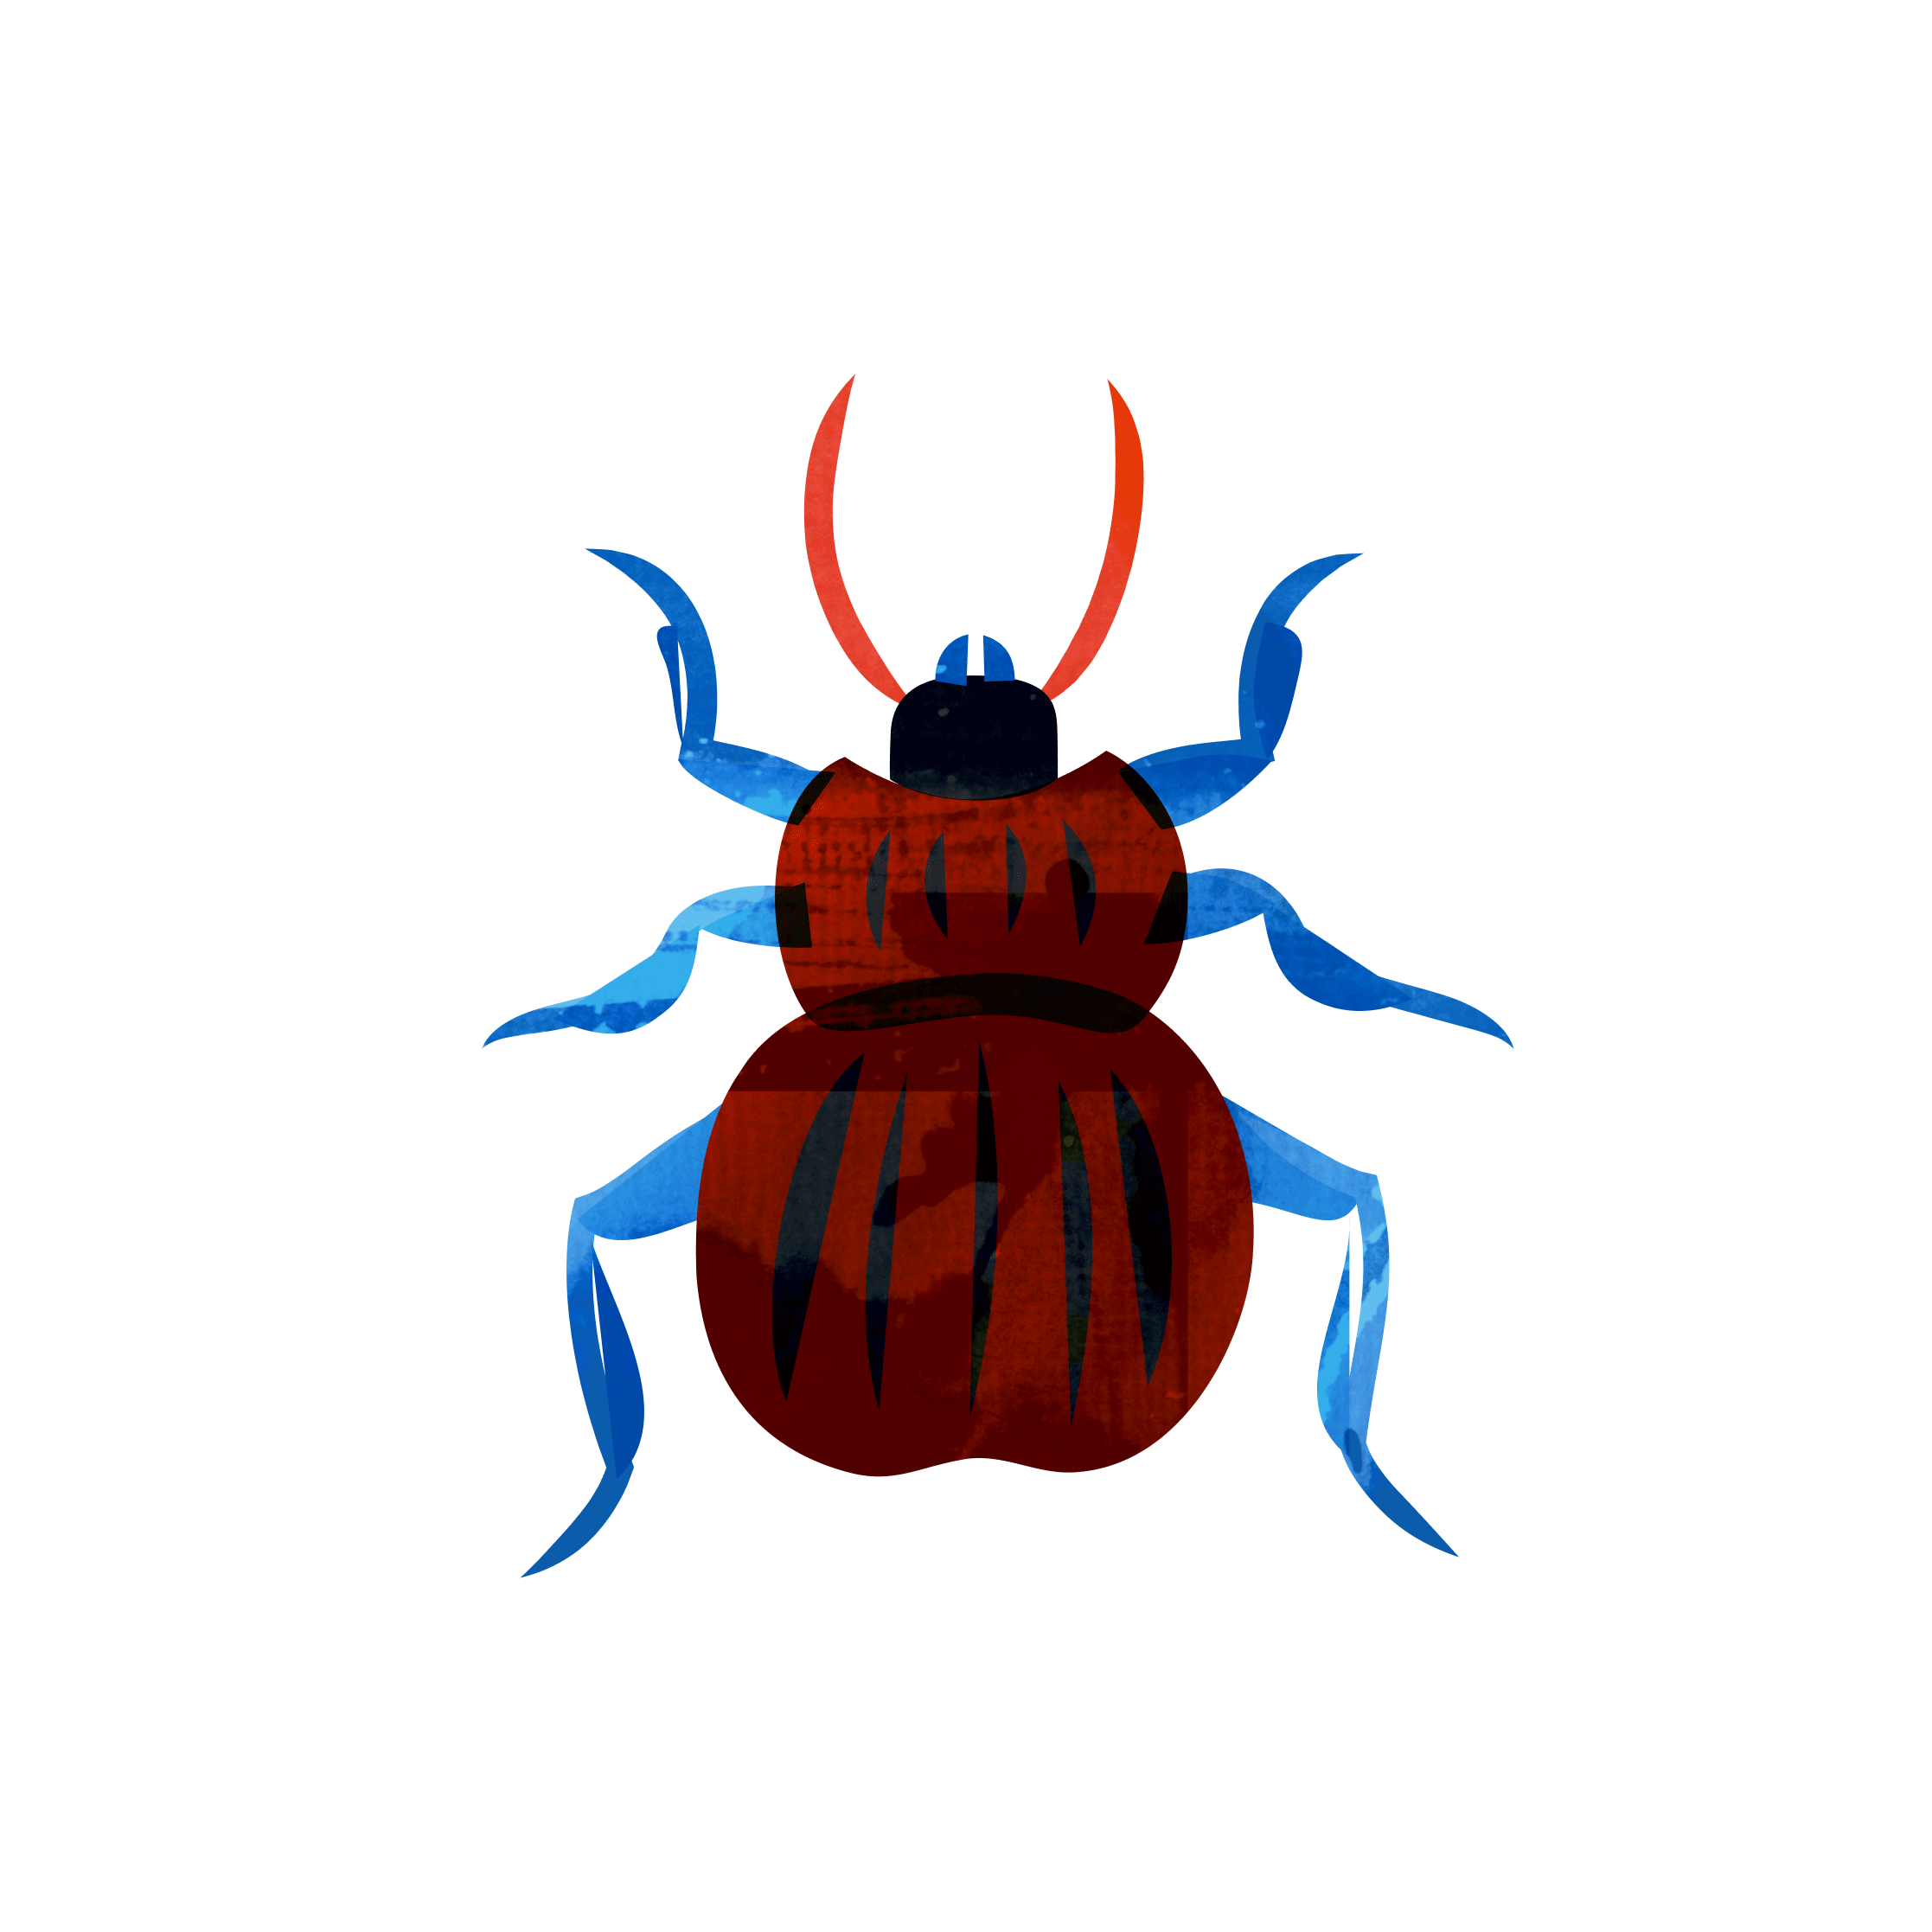 Bugs illustration nature